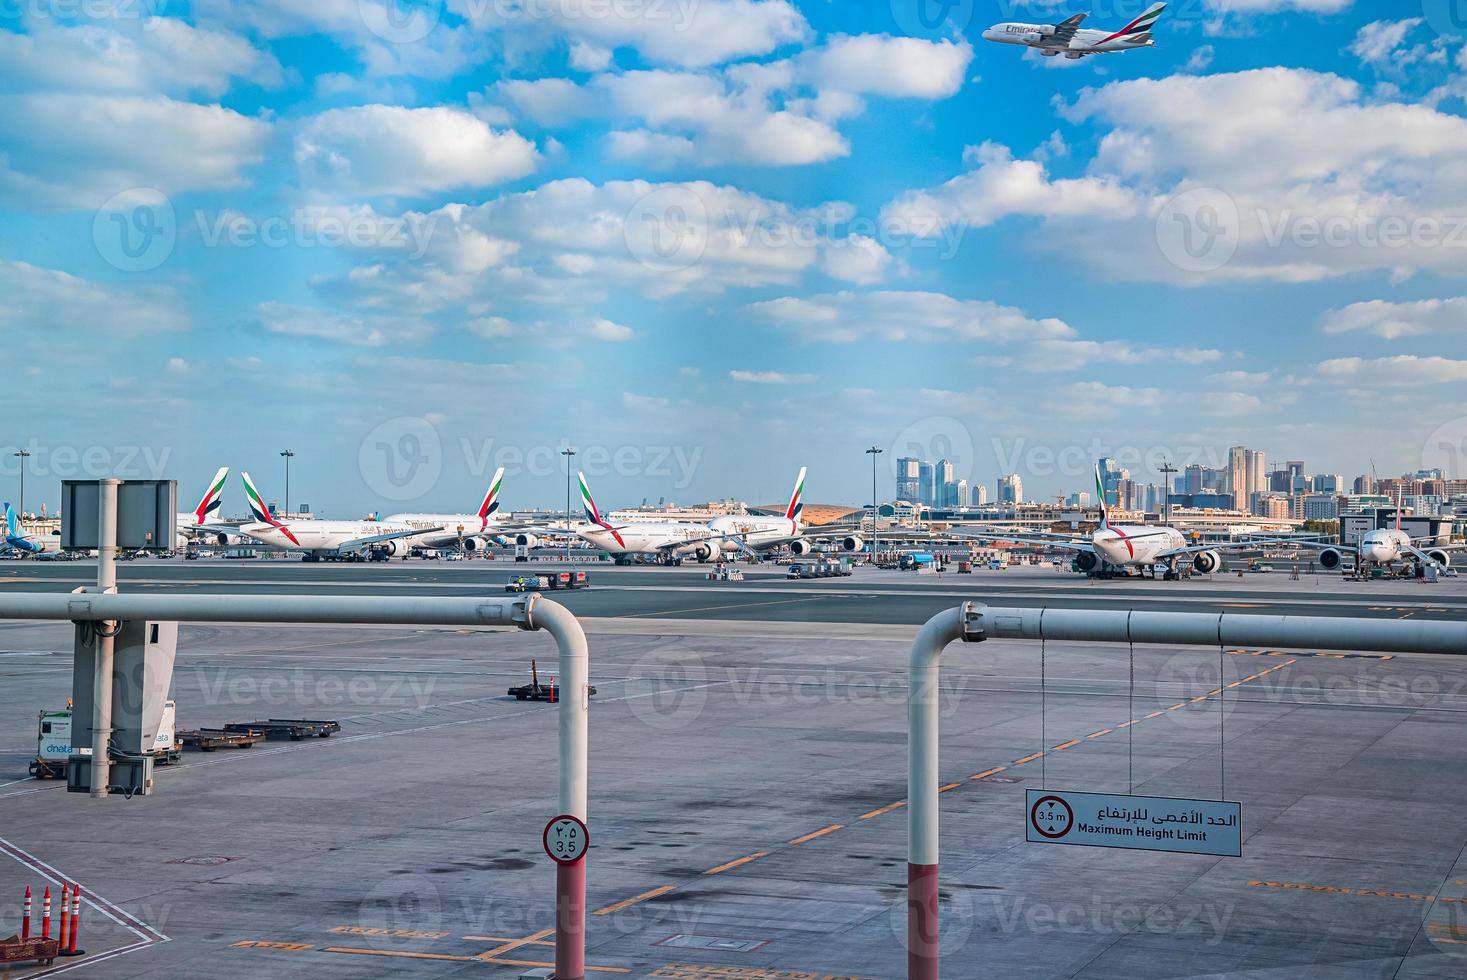 emirate airlines a330, 777 und a380 stehen am terminal 1 des dubai international airport dxb. foto